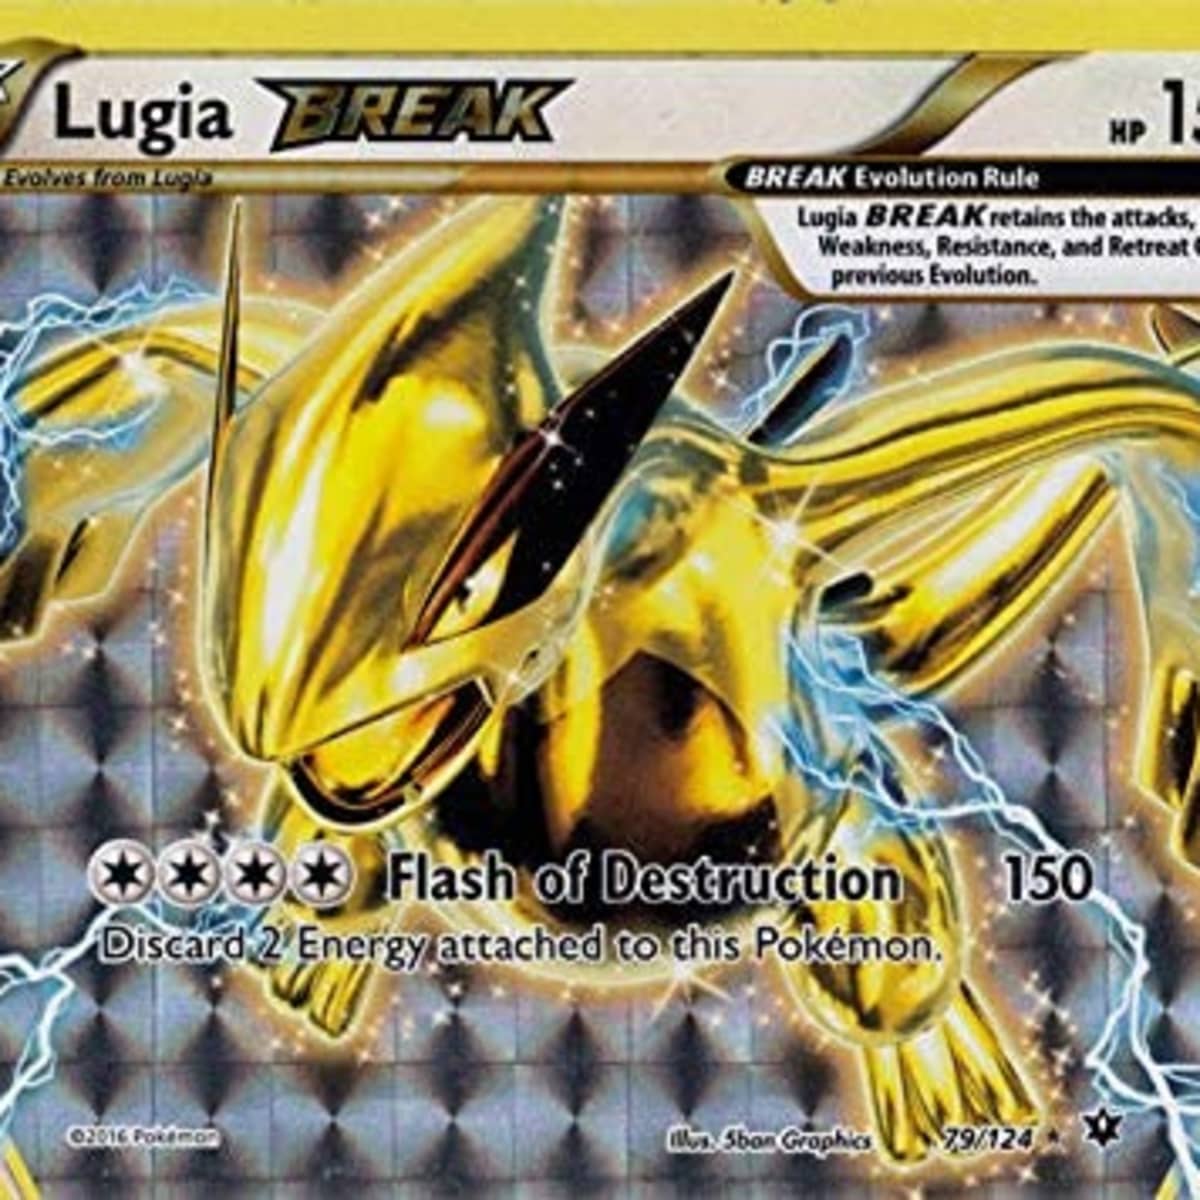 Top 10 Lugia Cards in the Pokemon Trading Card Game - HobbyLark